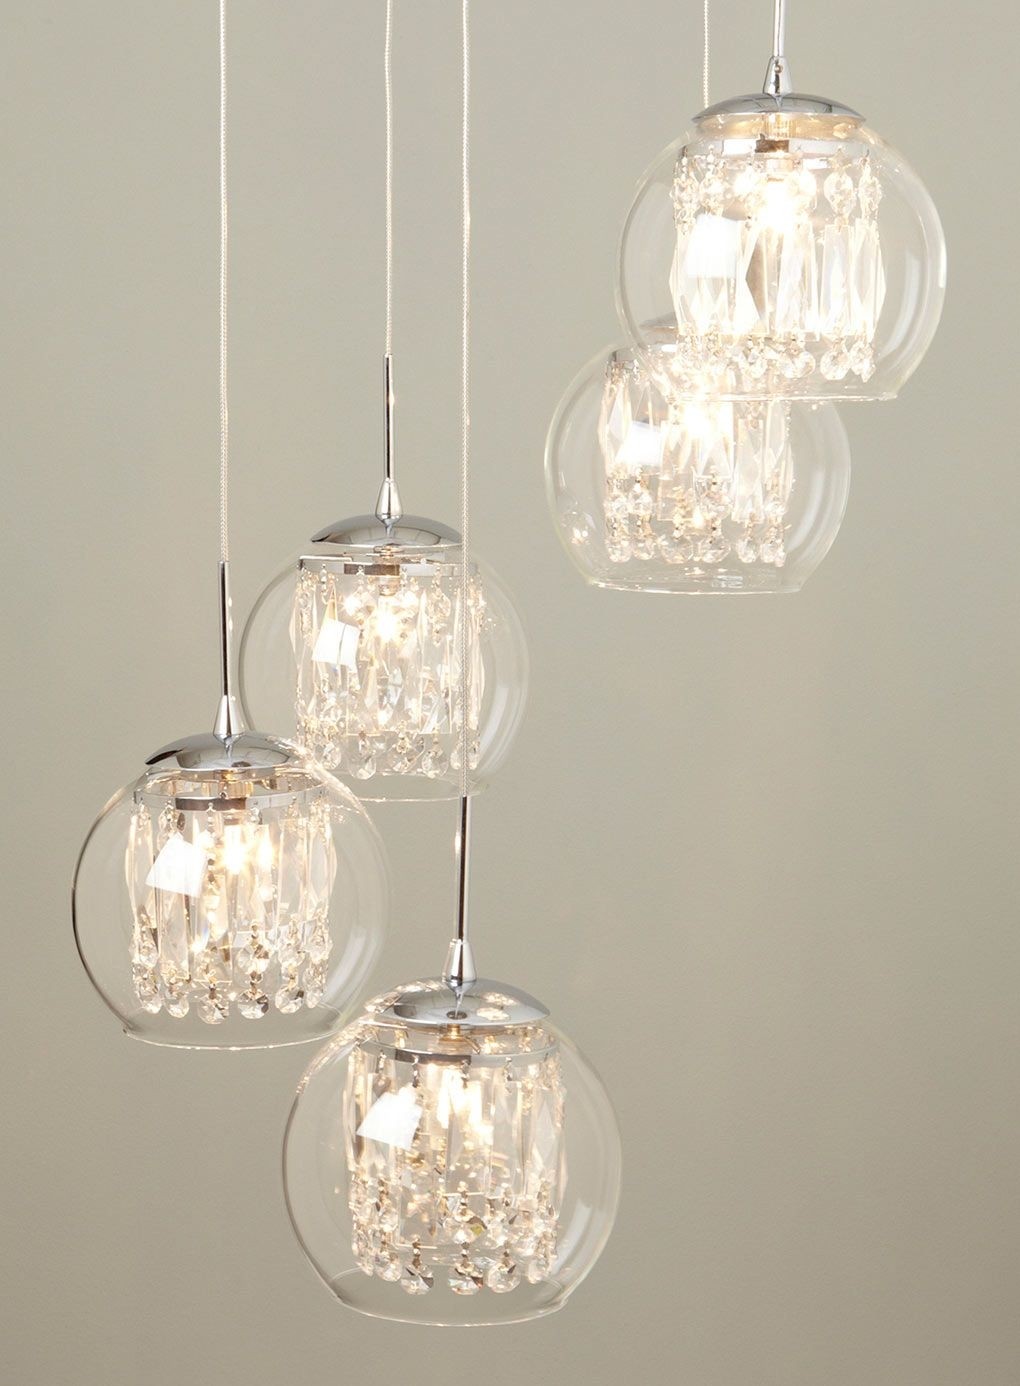 Glass kitchen pendant lights